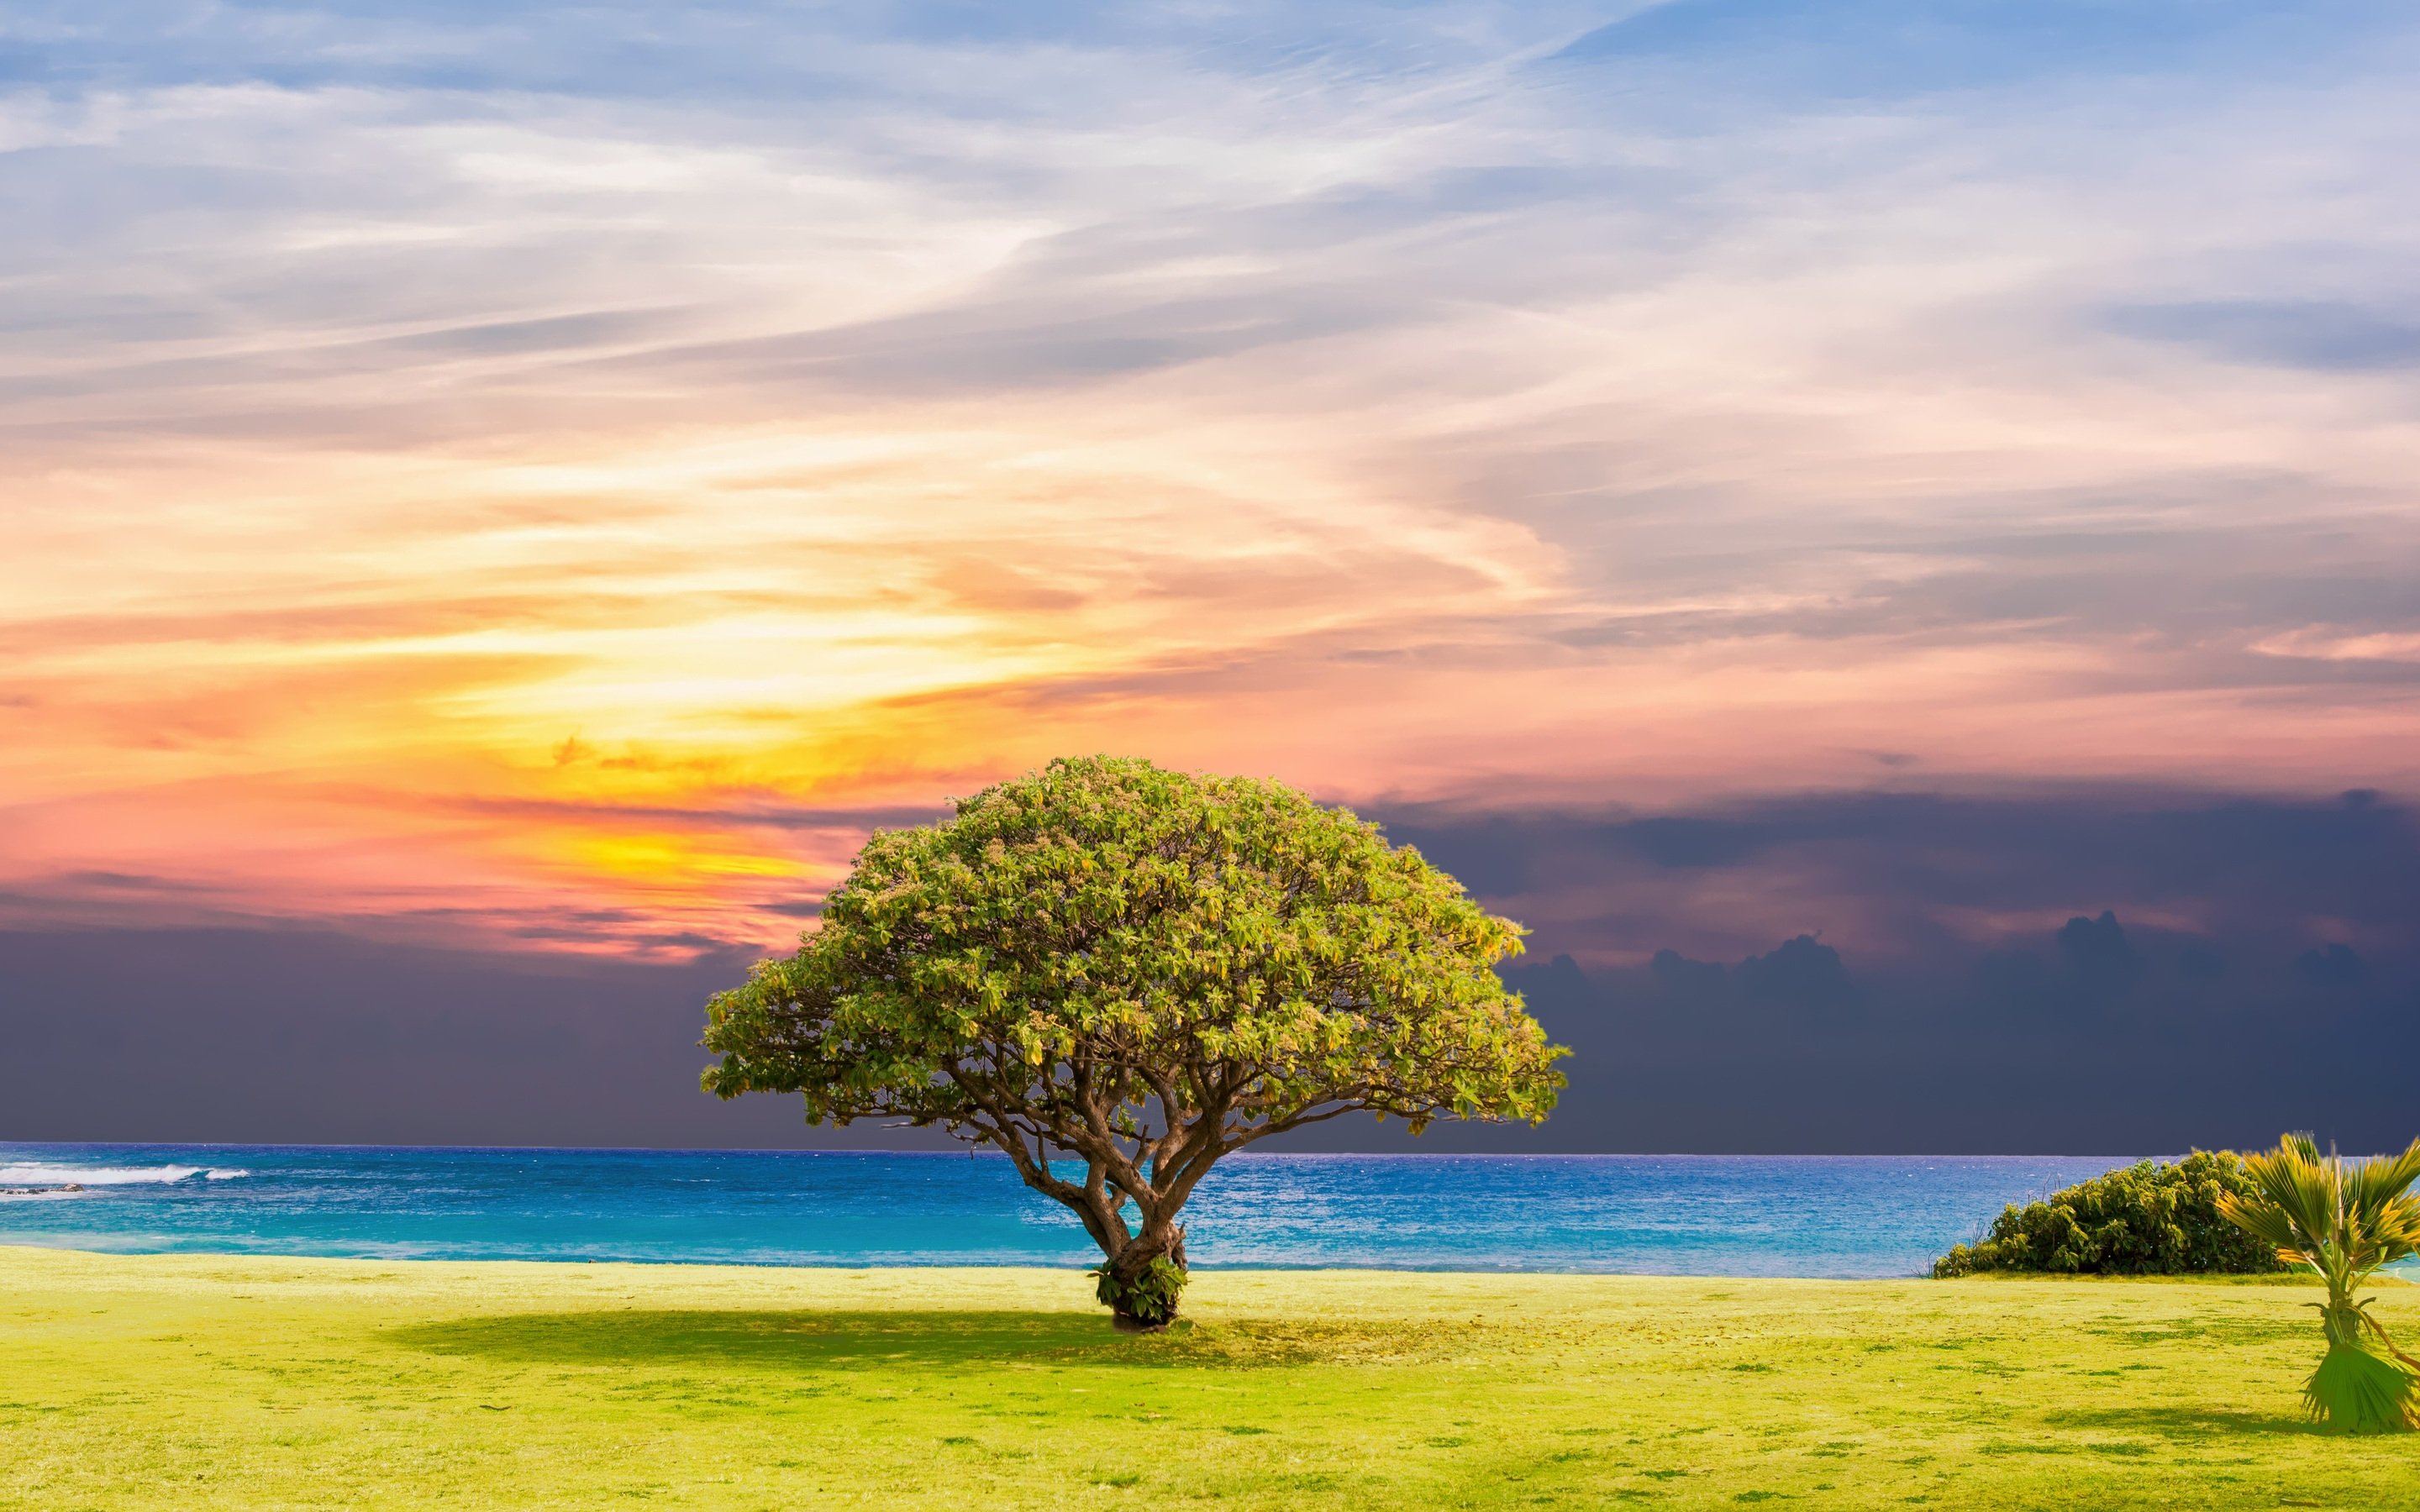 Ocean Summer Tree Landscape 5k Macbook Pro Retina HD 4k Wallpaper, Image, Background, Photo and Picture